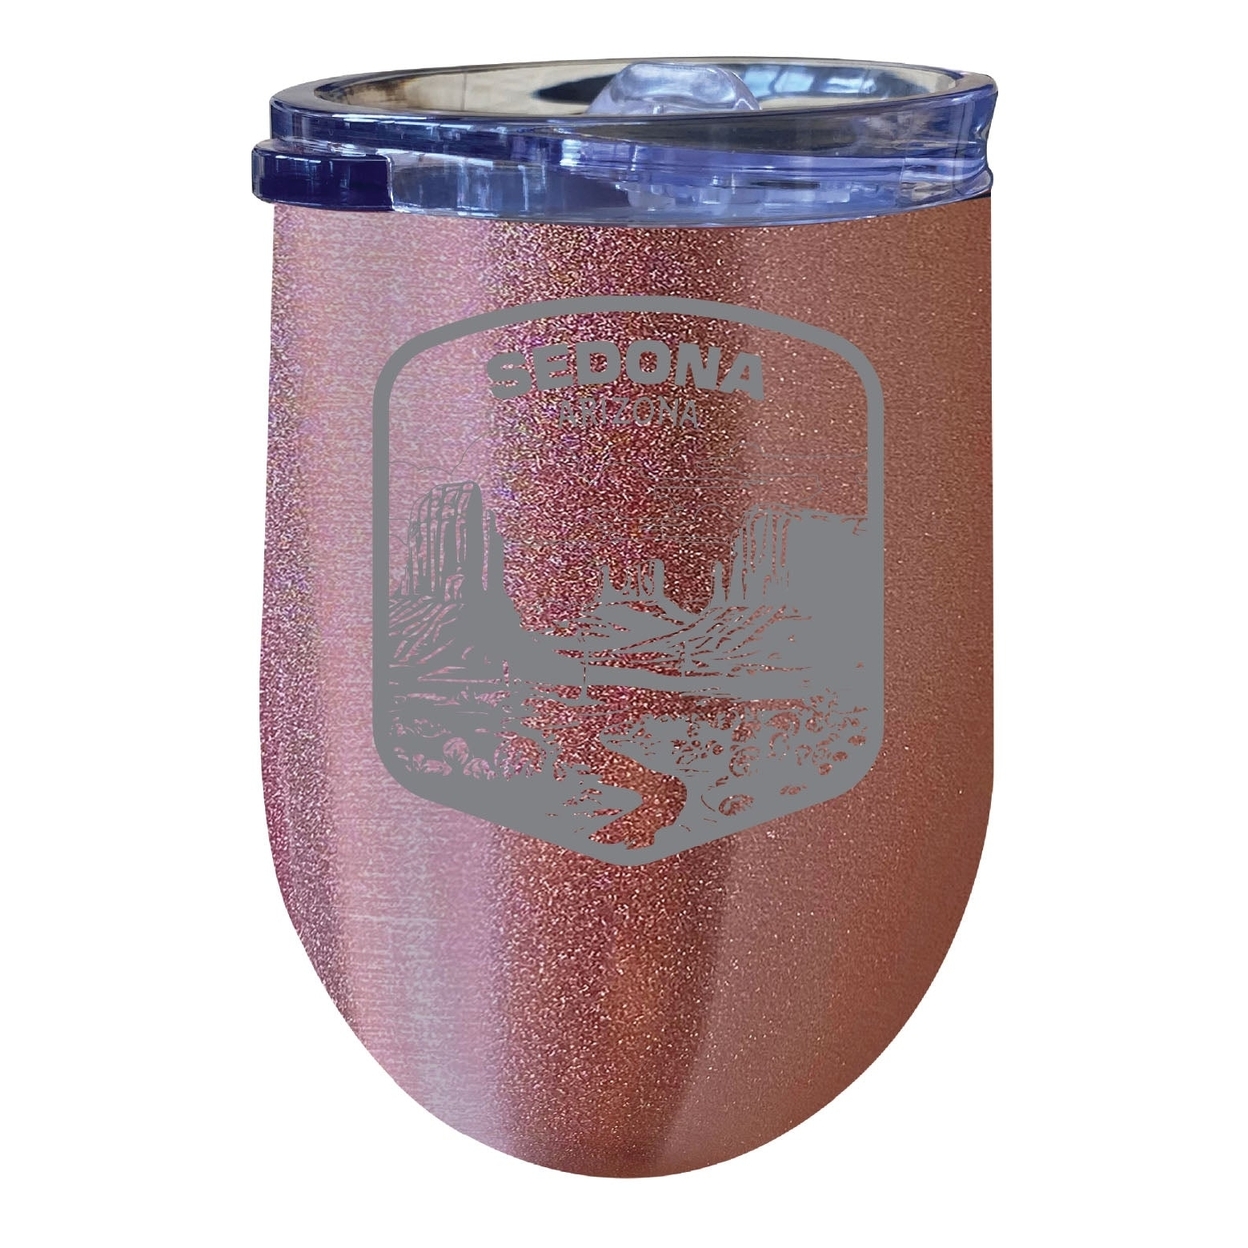 Sedona Arizona Souvenir 12 Oz Engraved Insulated Wine Stainless Steel Tumbler - Rose Gold,,2-Pack